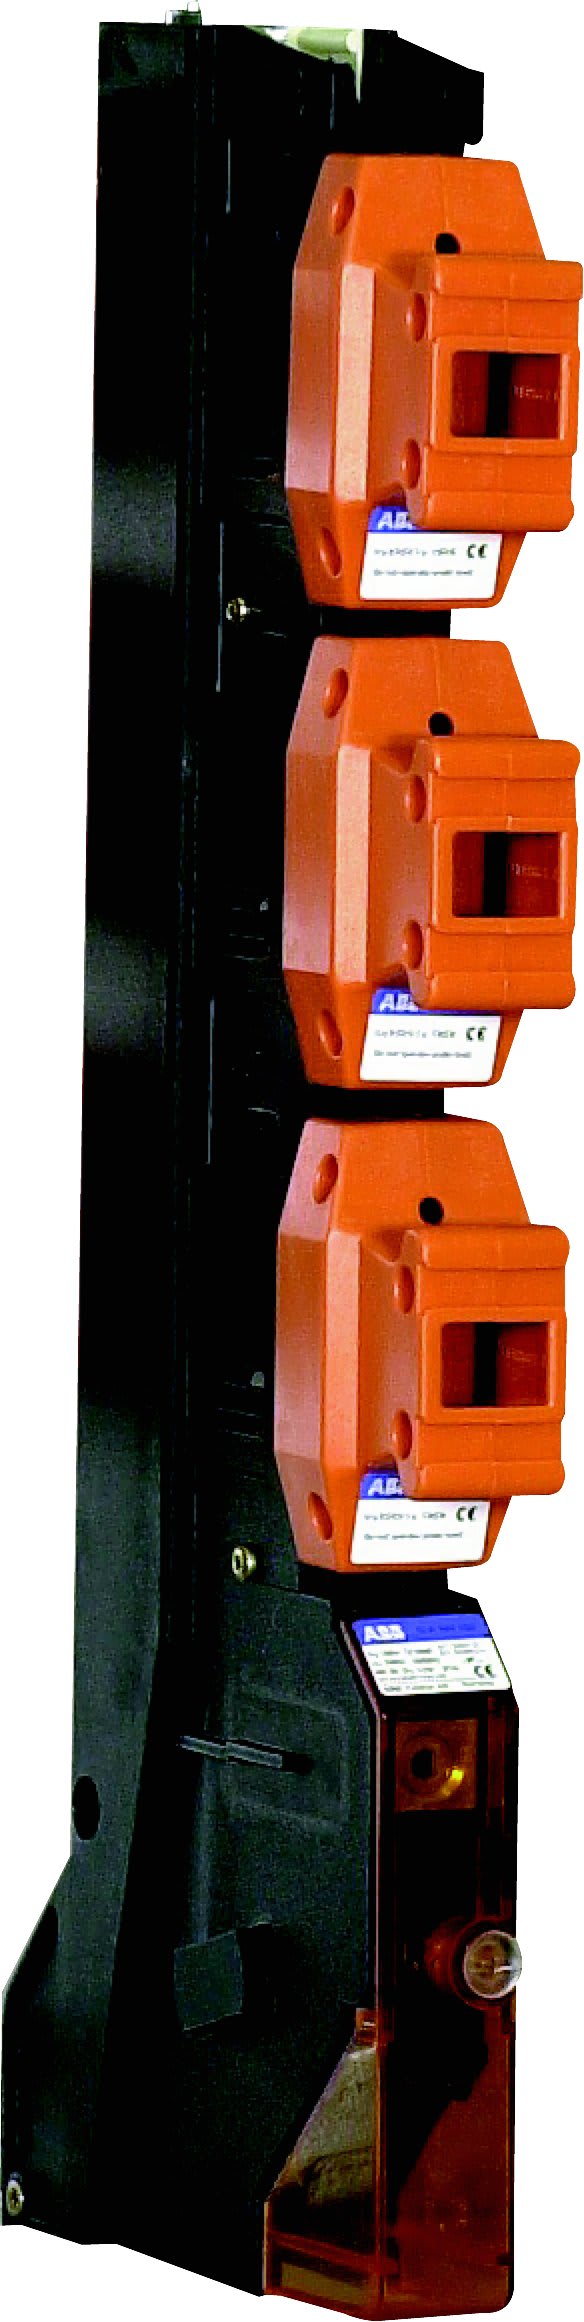 ABB Electrification - SLK-NH 160 1 polt sikringslastskillebryter bredde 50mm